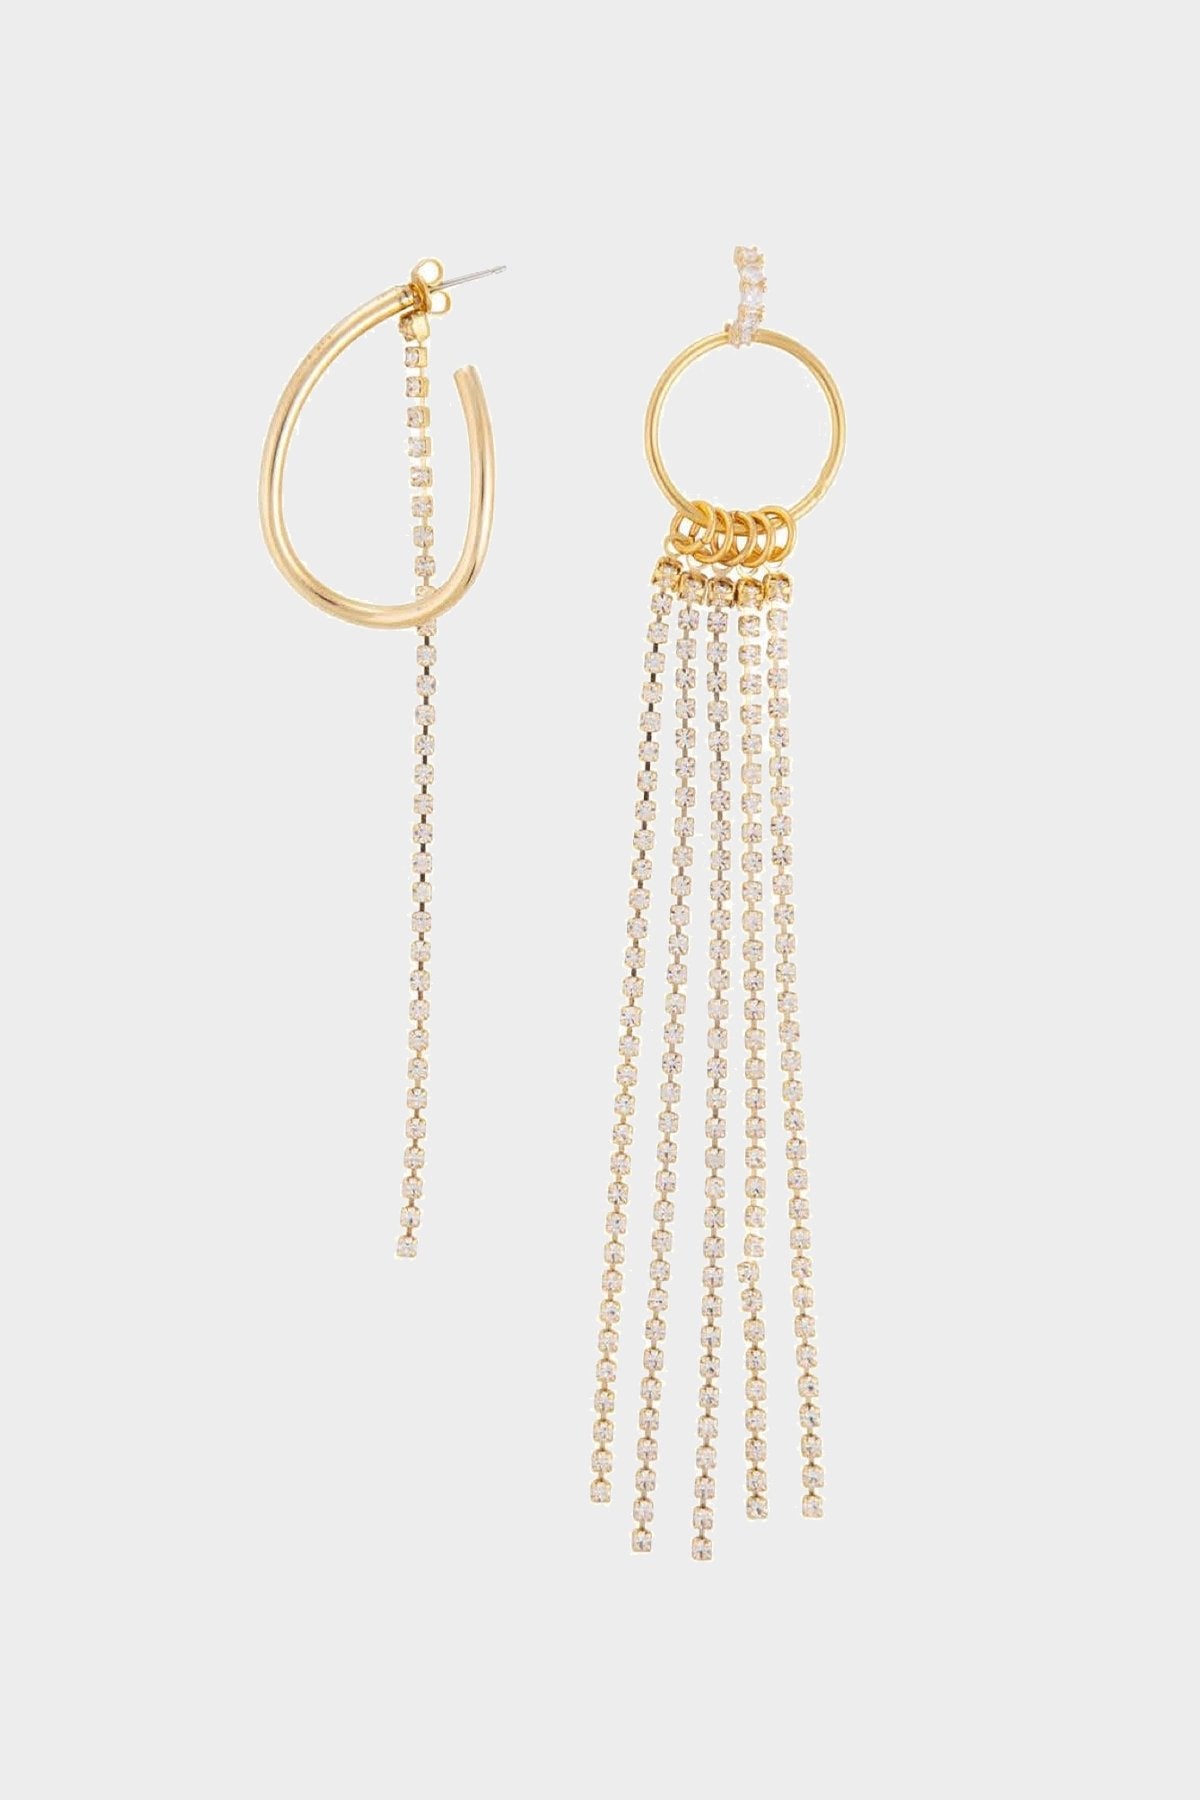 Splash Mismatched Pair Earrings in Gold - shop-olivia.com